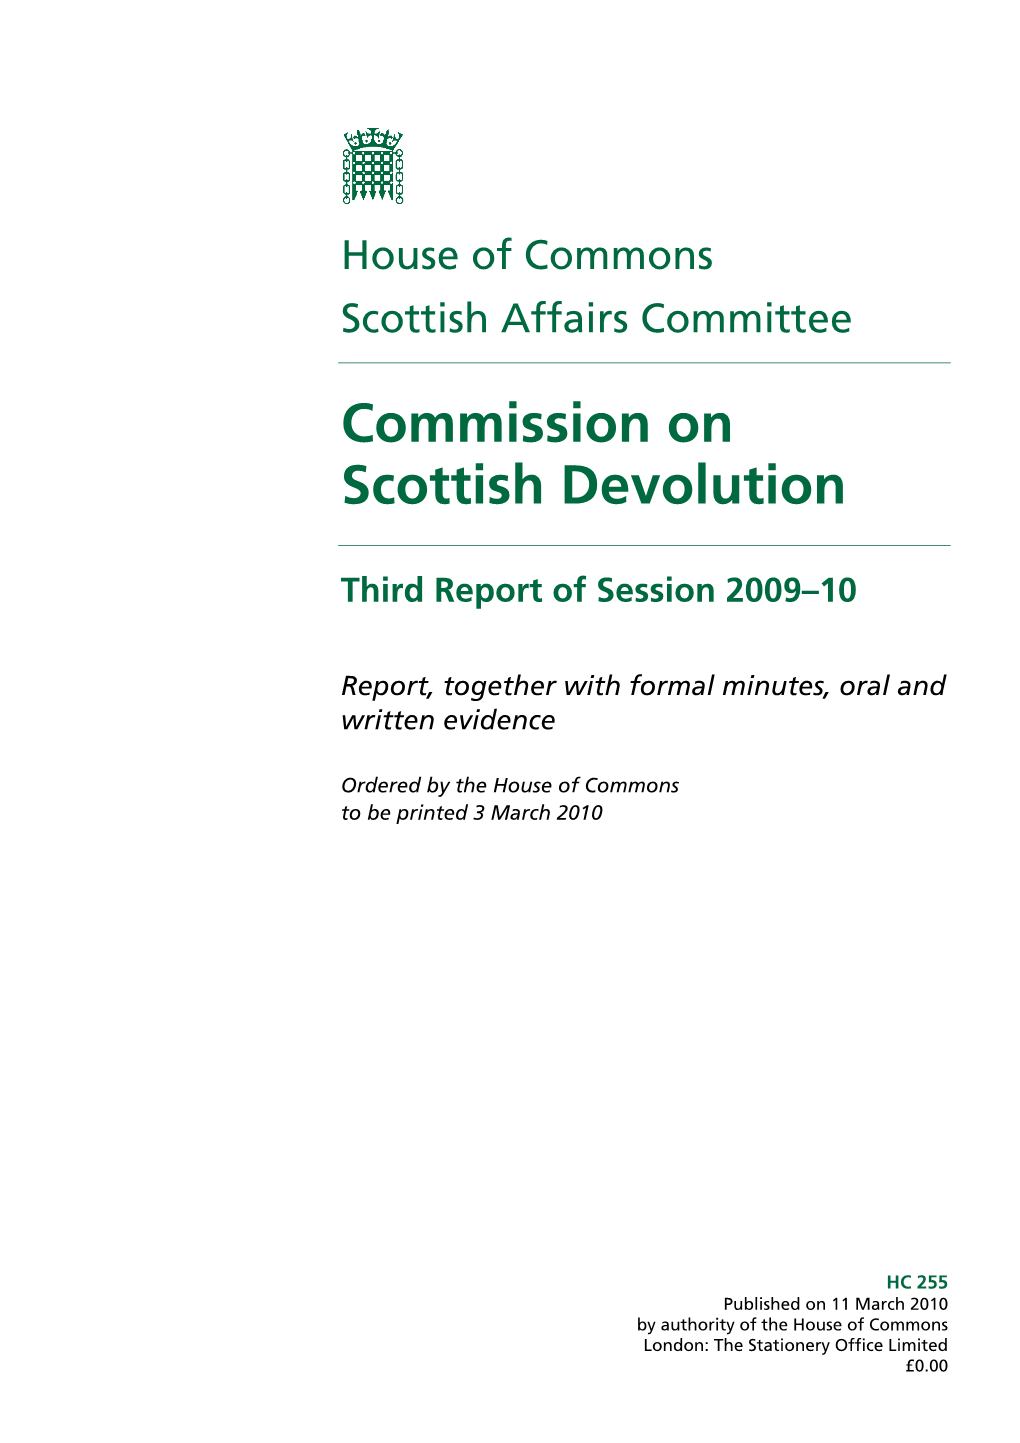 Commission on Scottish Devolution